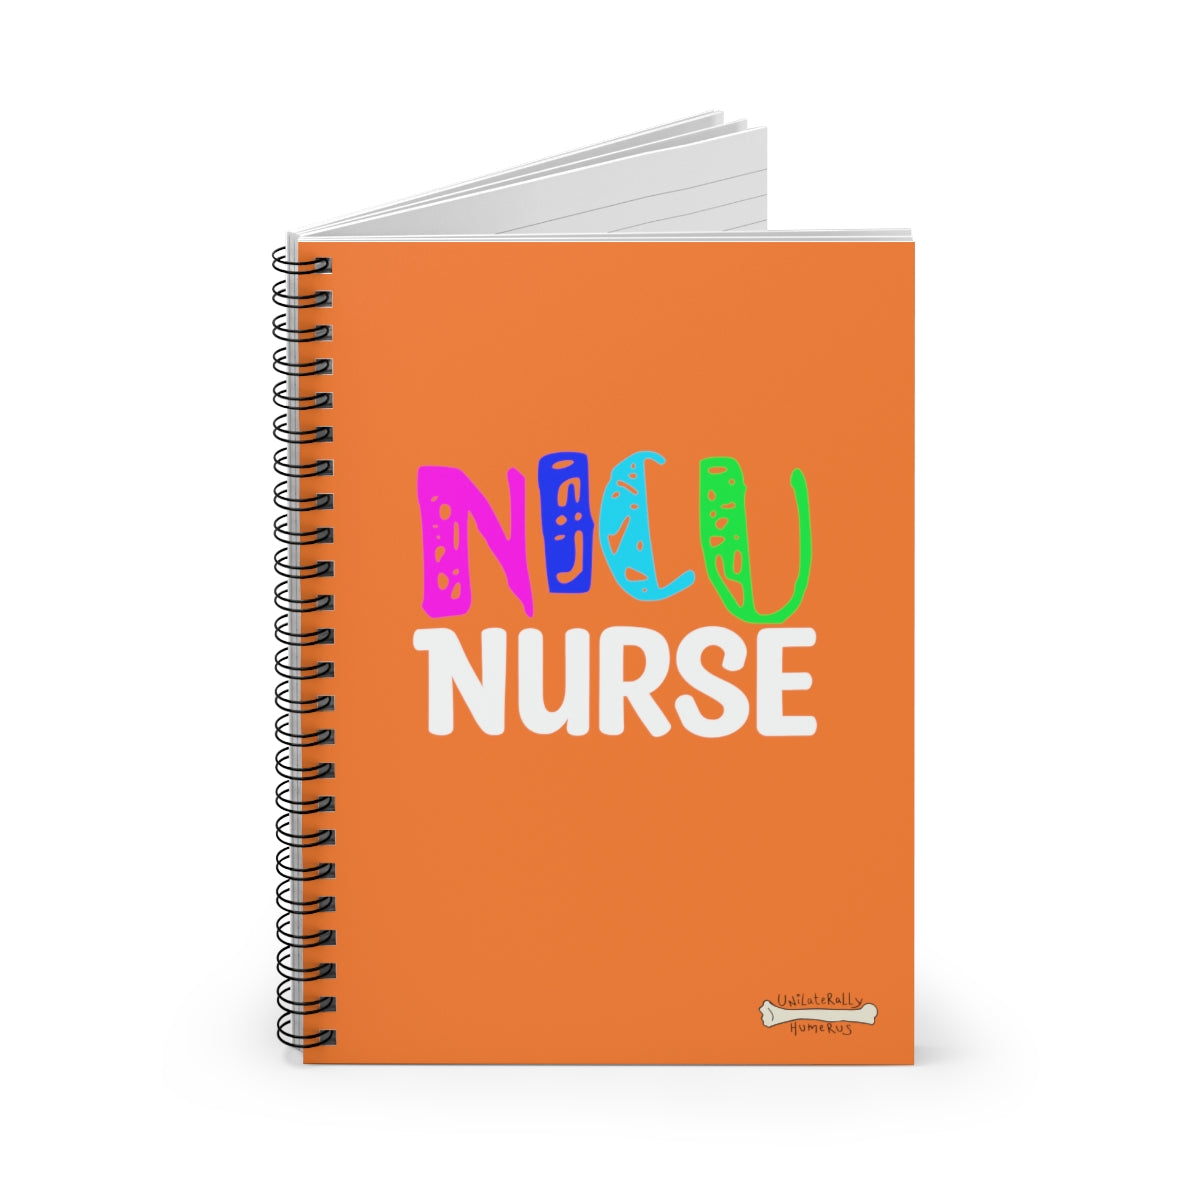 NICU Nurse Spiral Notebook - Ruled Line